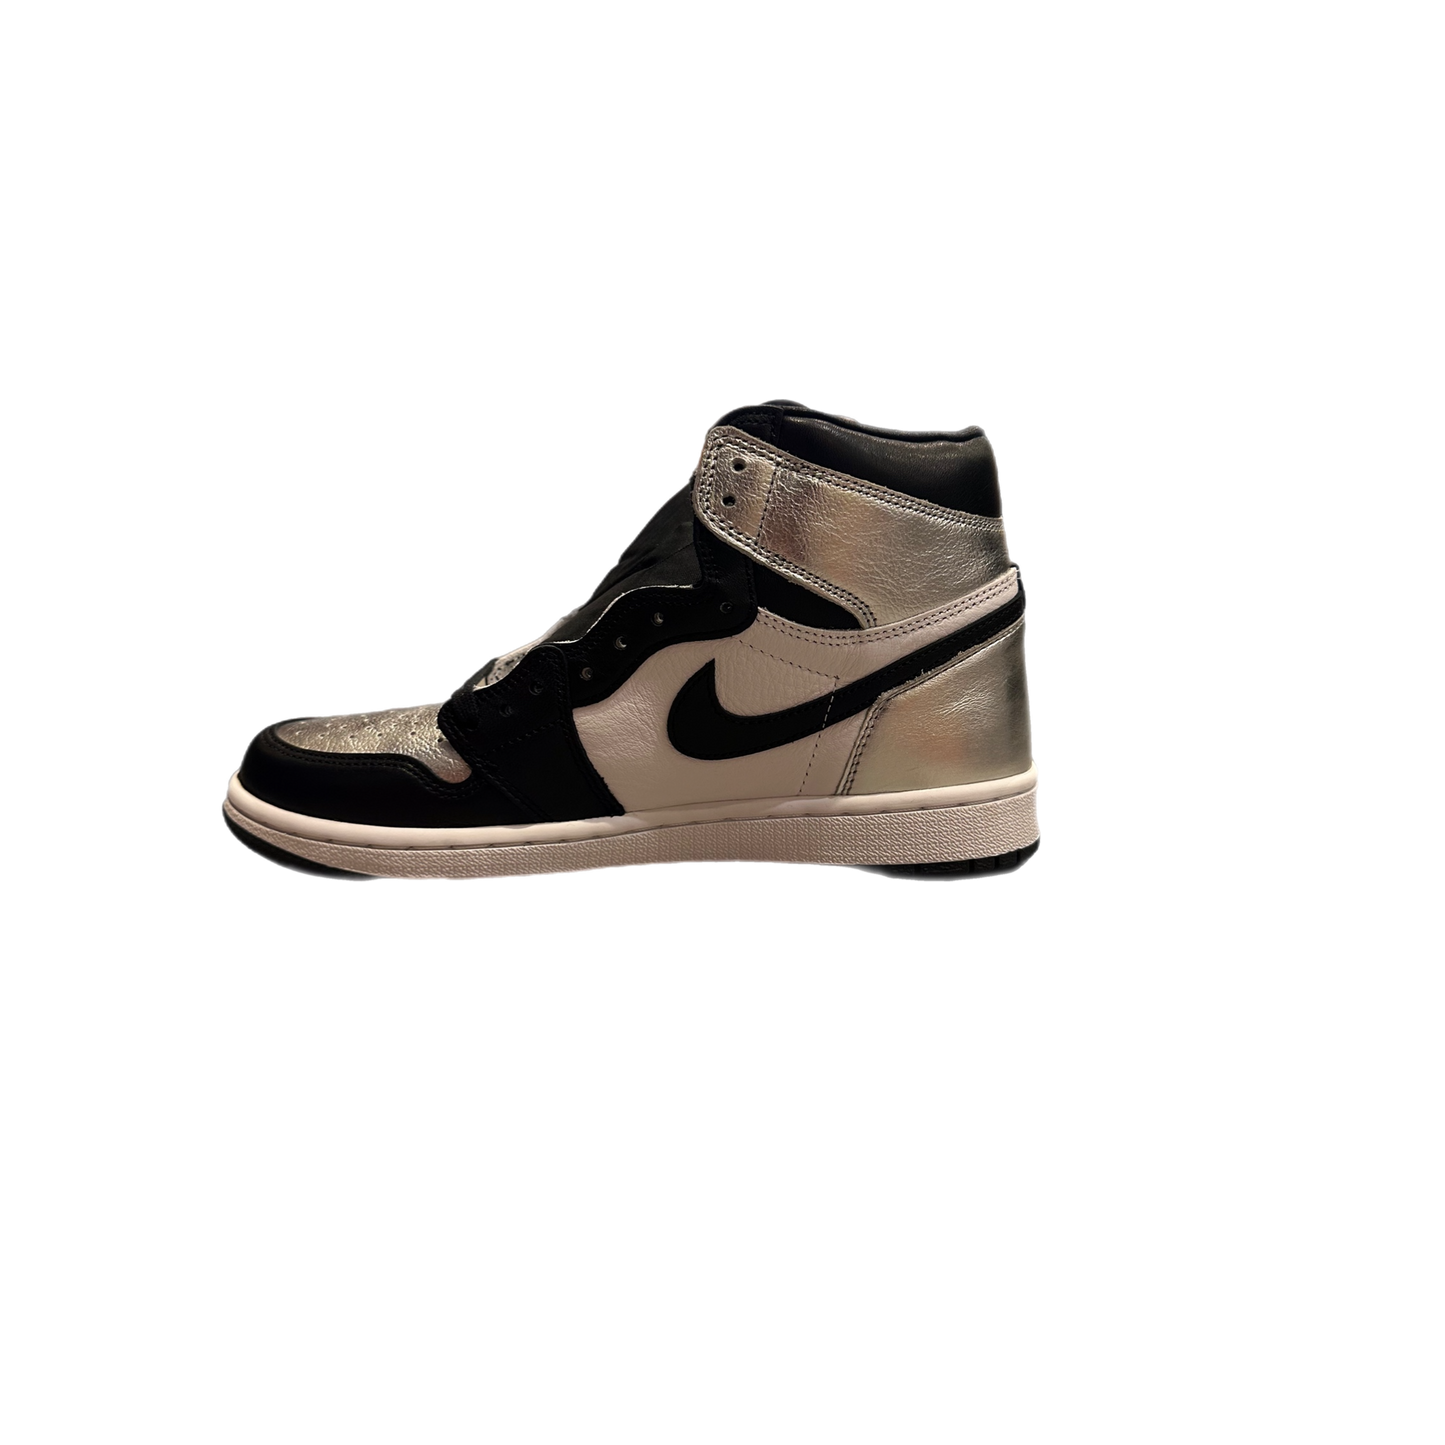 Jordan - "1 High Silver Toe" - Size 8.5